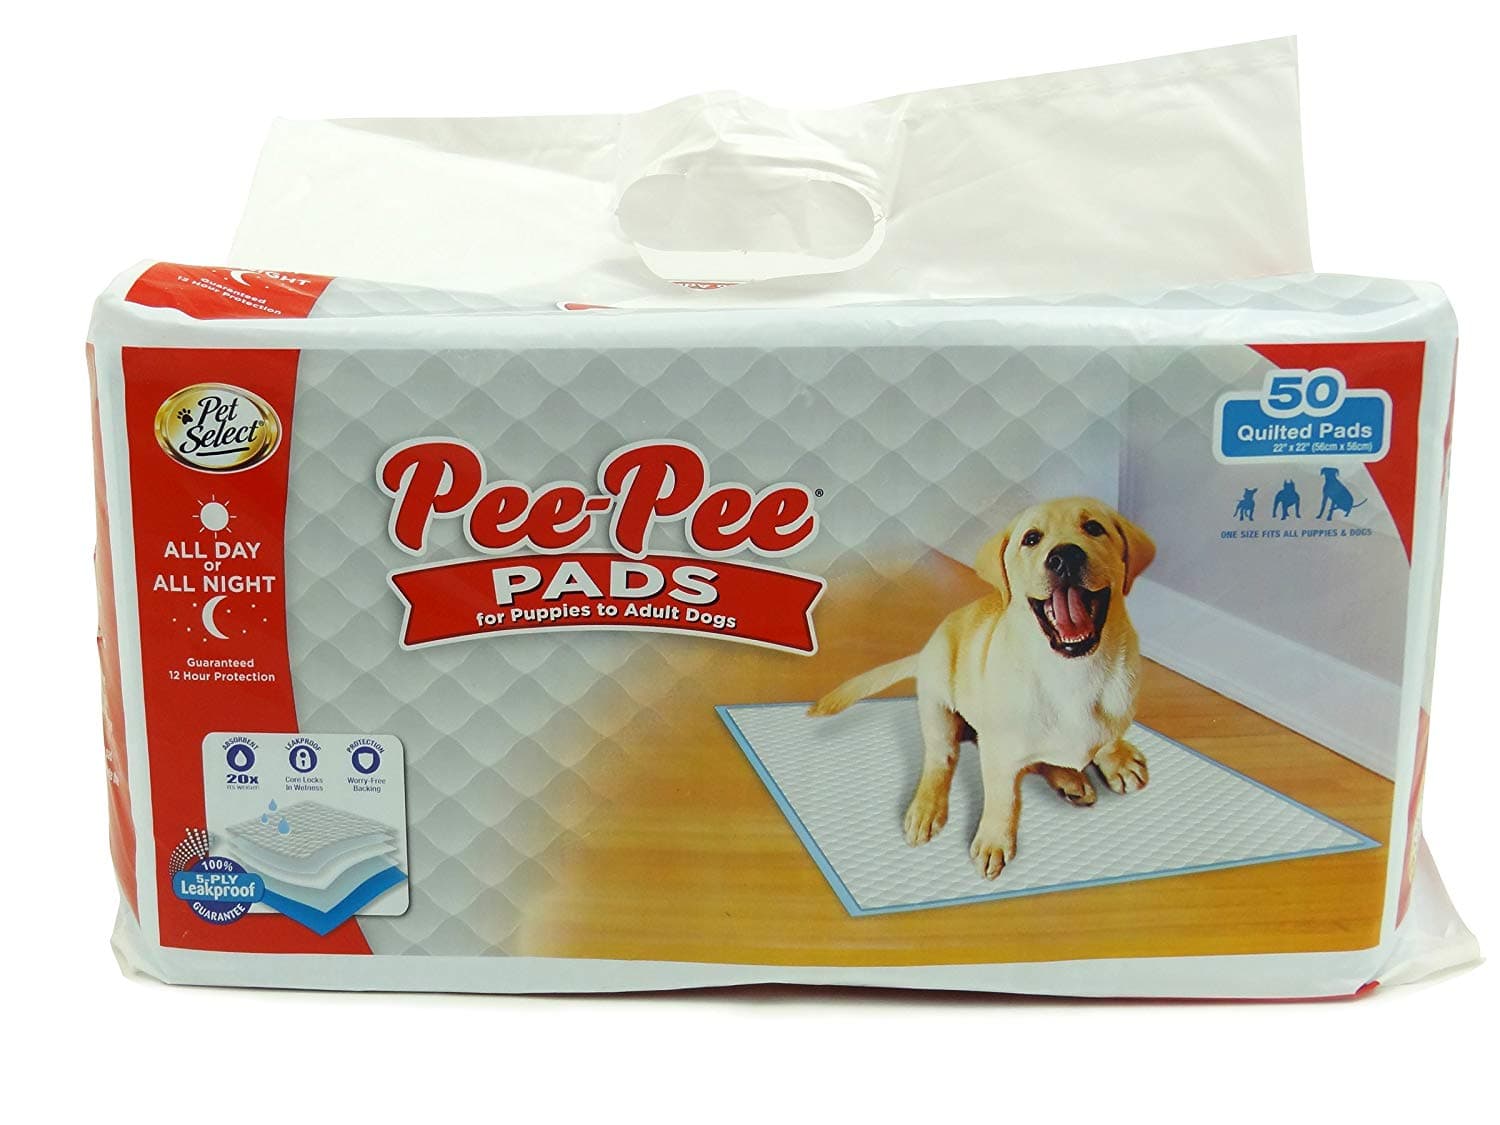 Four Paws Pet Select Pee-Pee Pads, 50ct